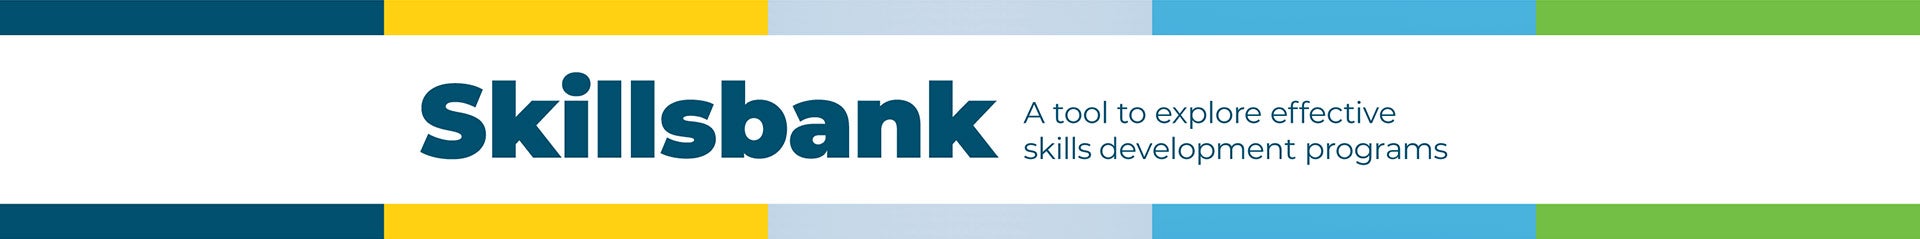 Skillsbank